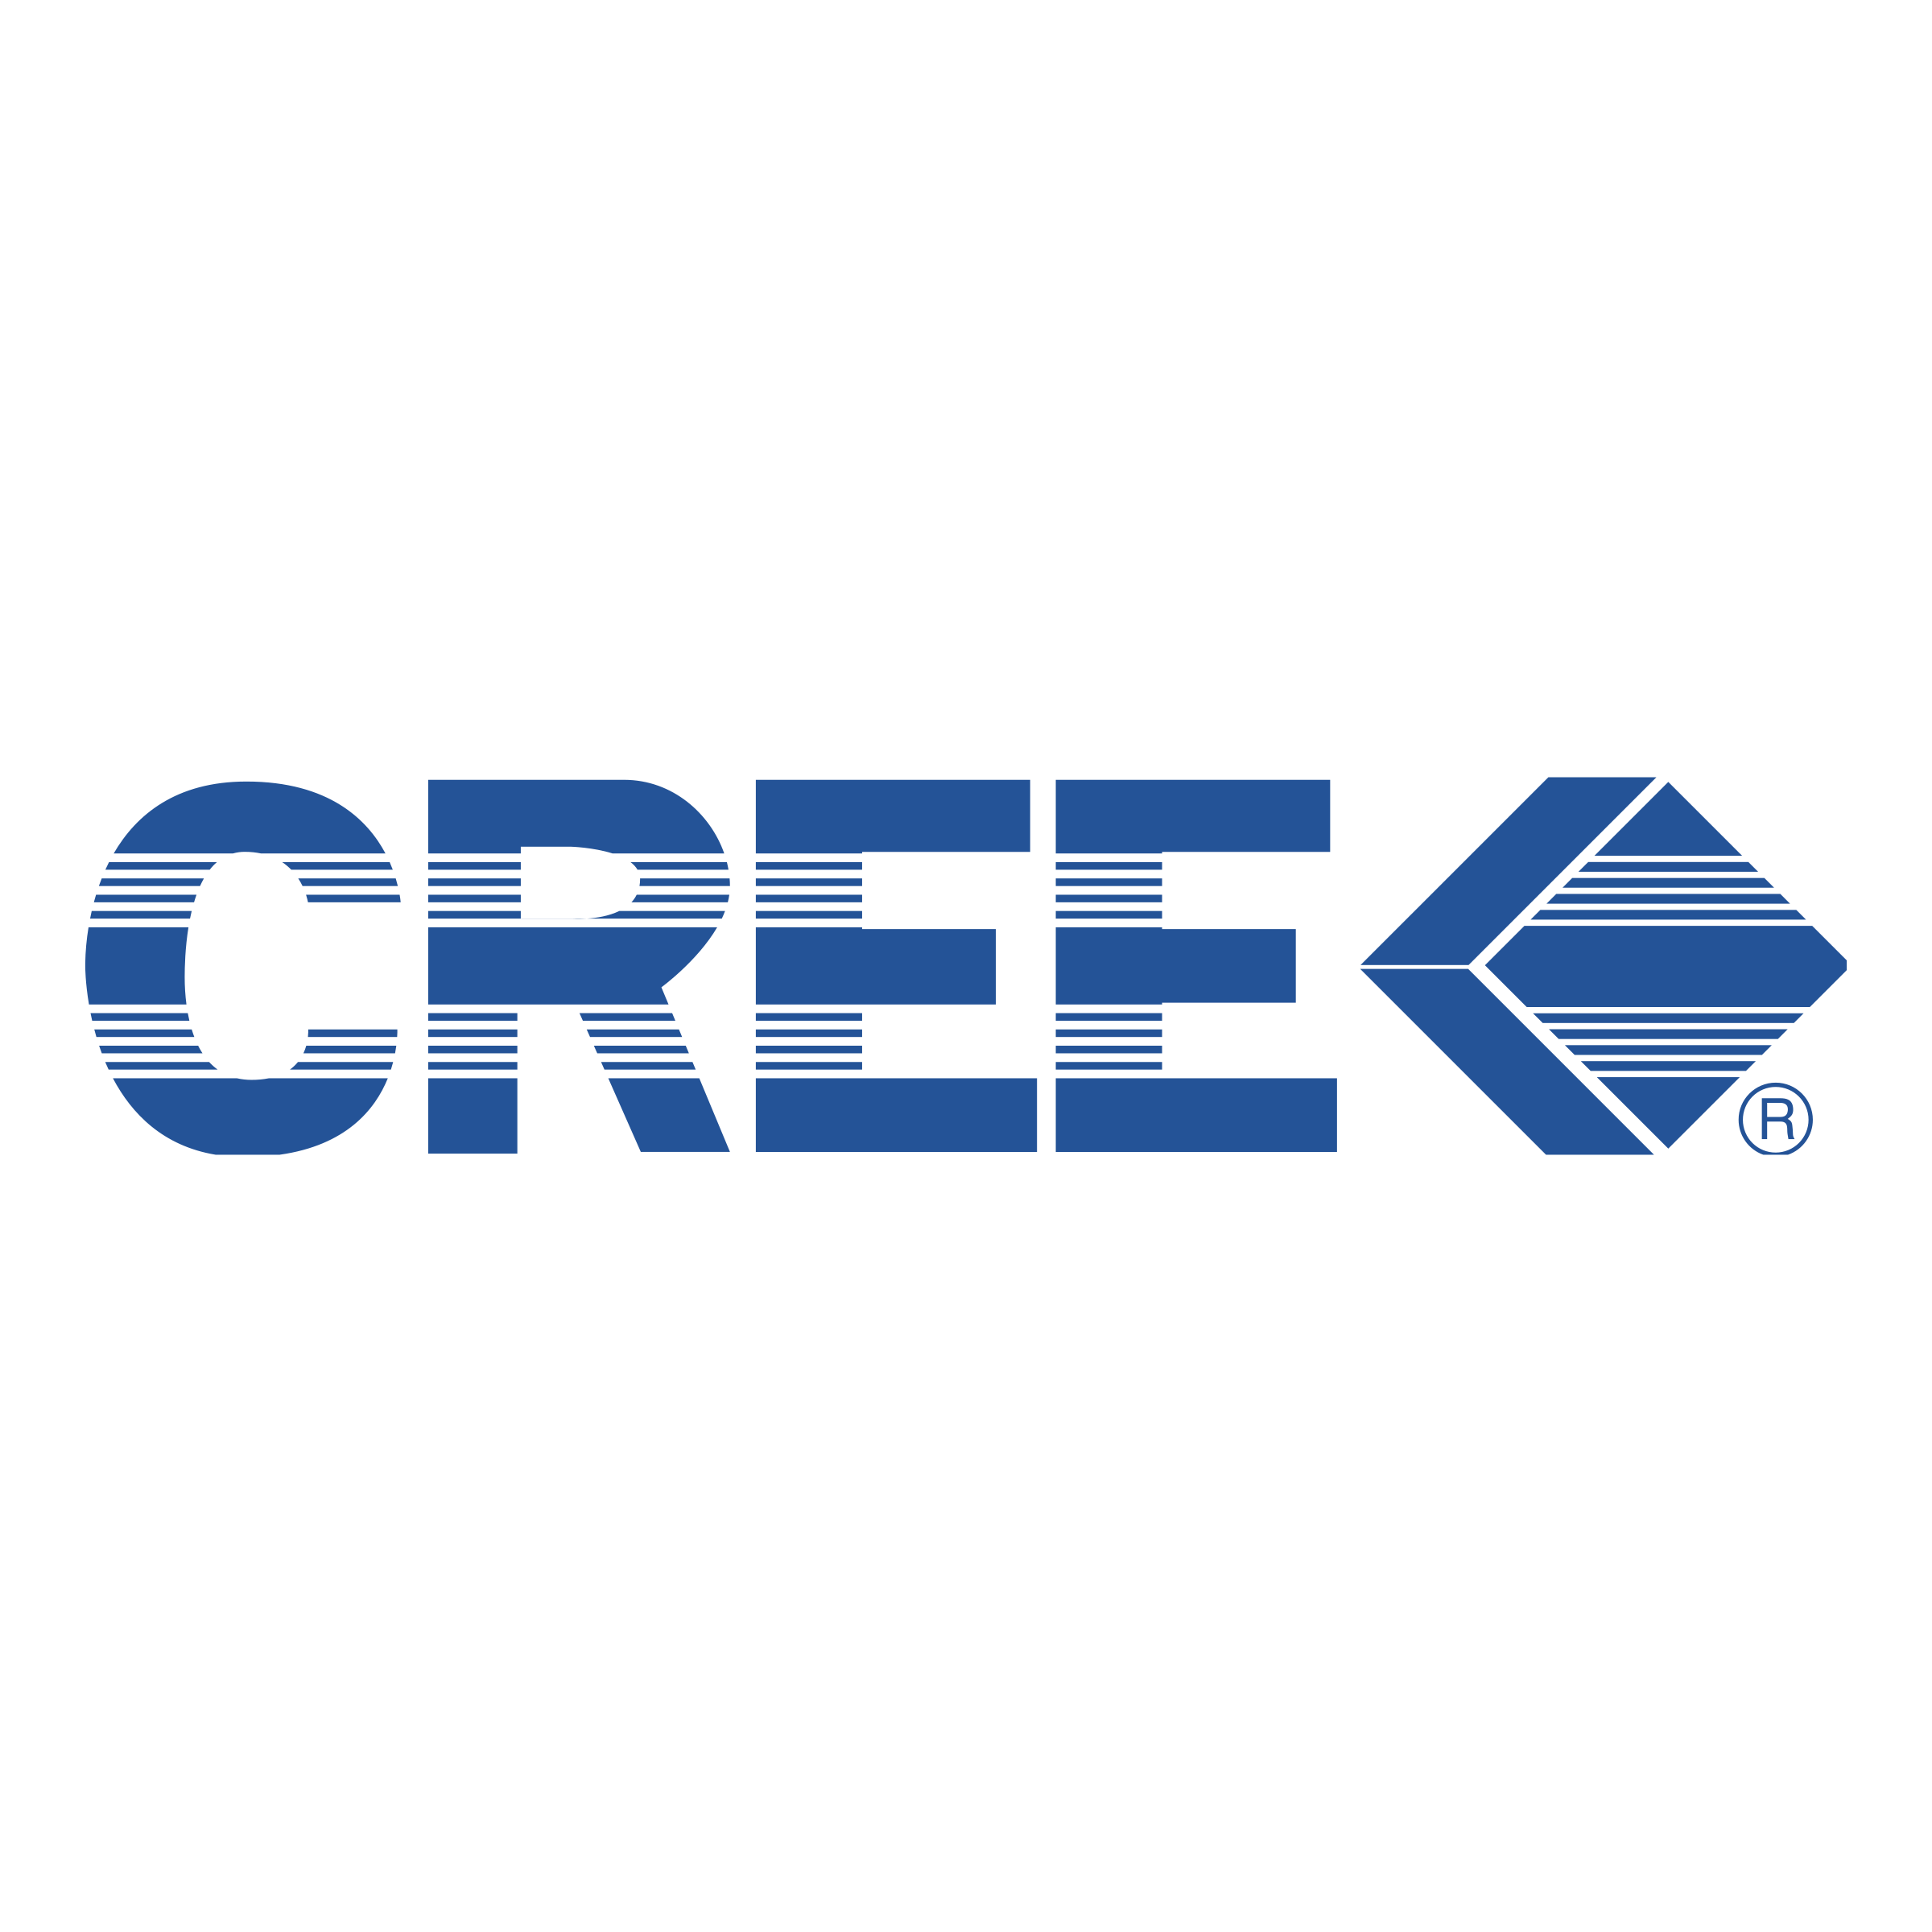 Cree Logo - Cree Logo PNG Transparent & SVG Vector - Freebie Supply